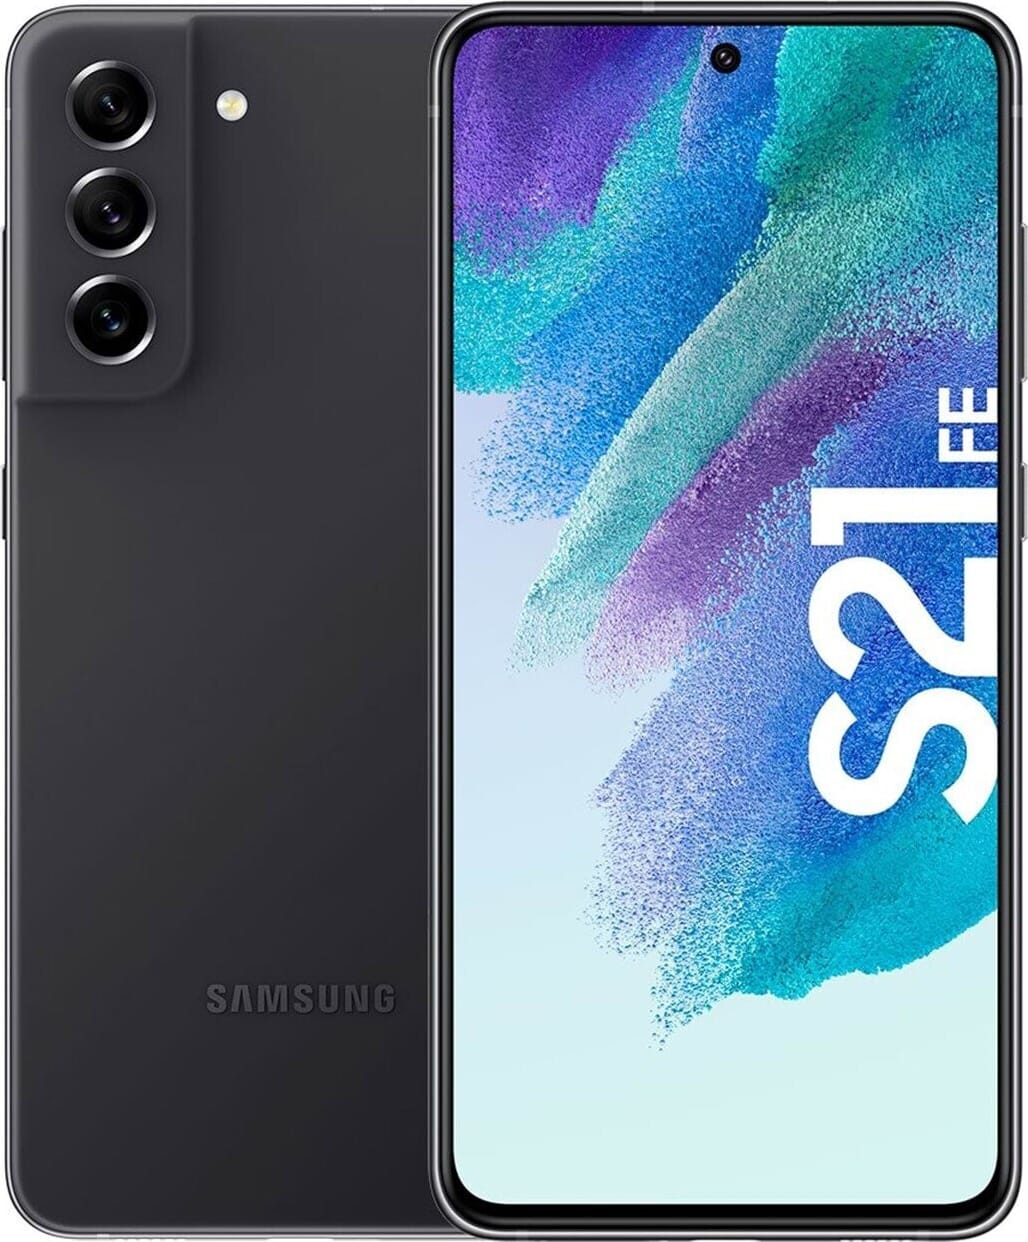 Graphite Samsung Galaxy S21 FE Smartphone - 128GB - Dual SIM.5